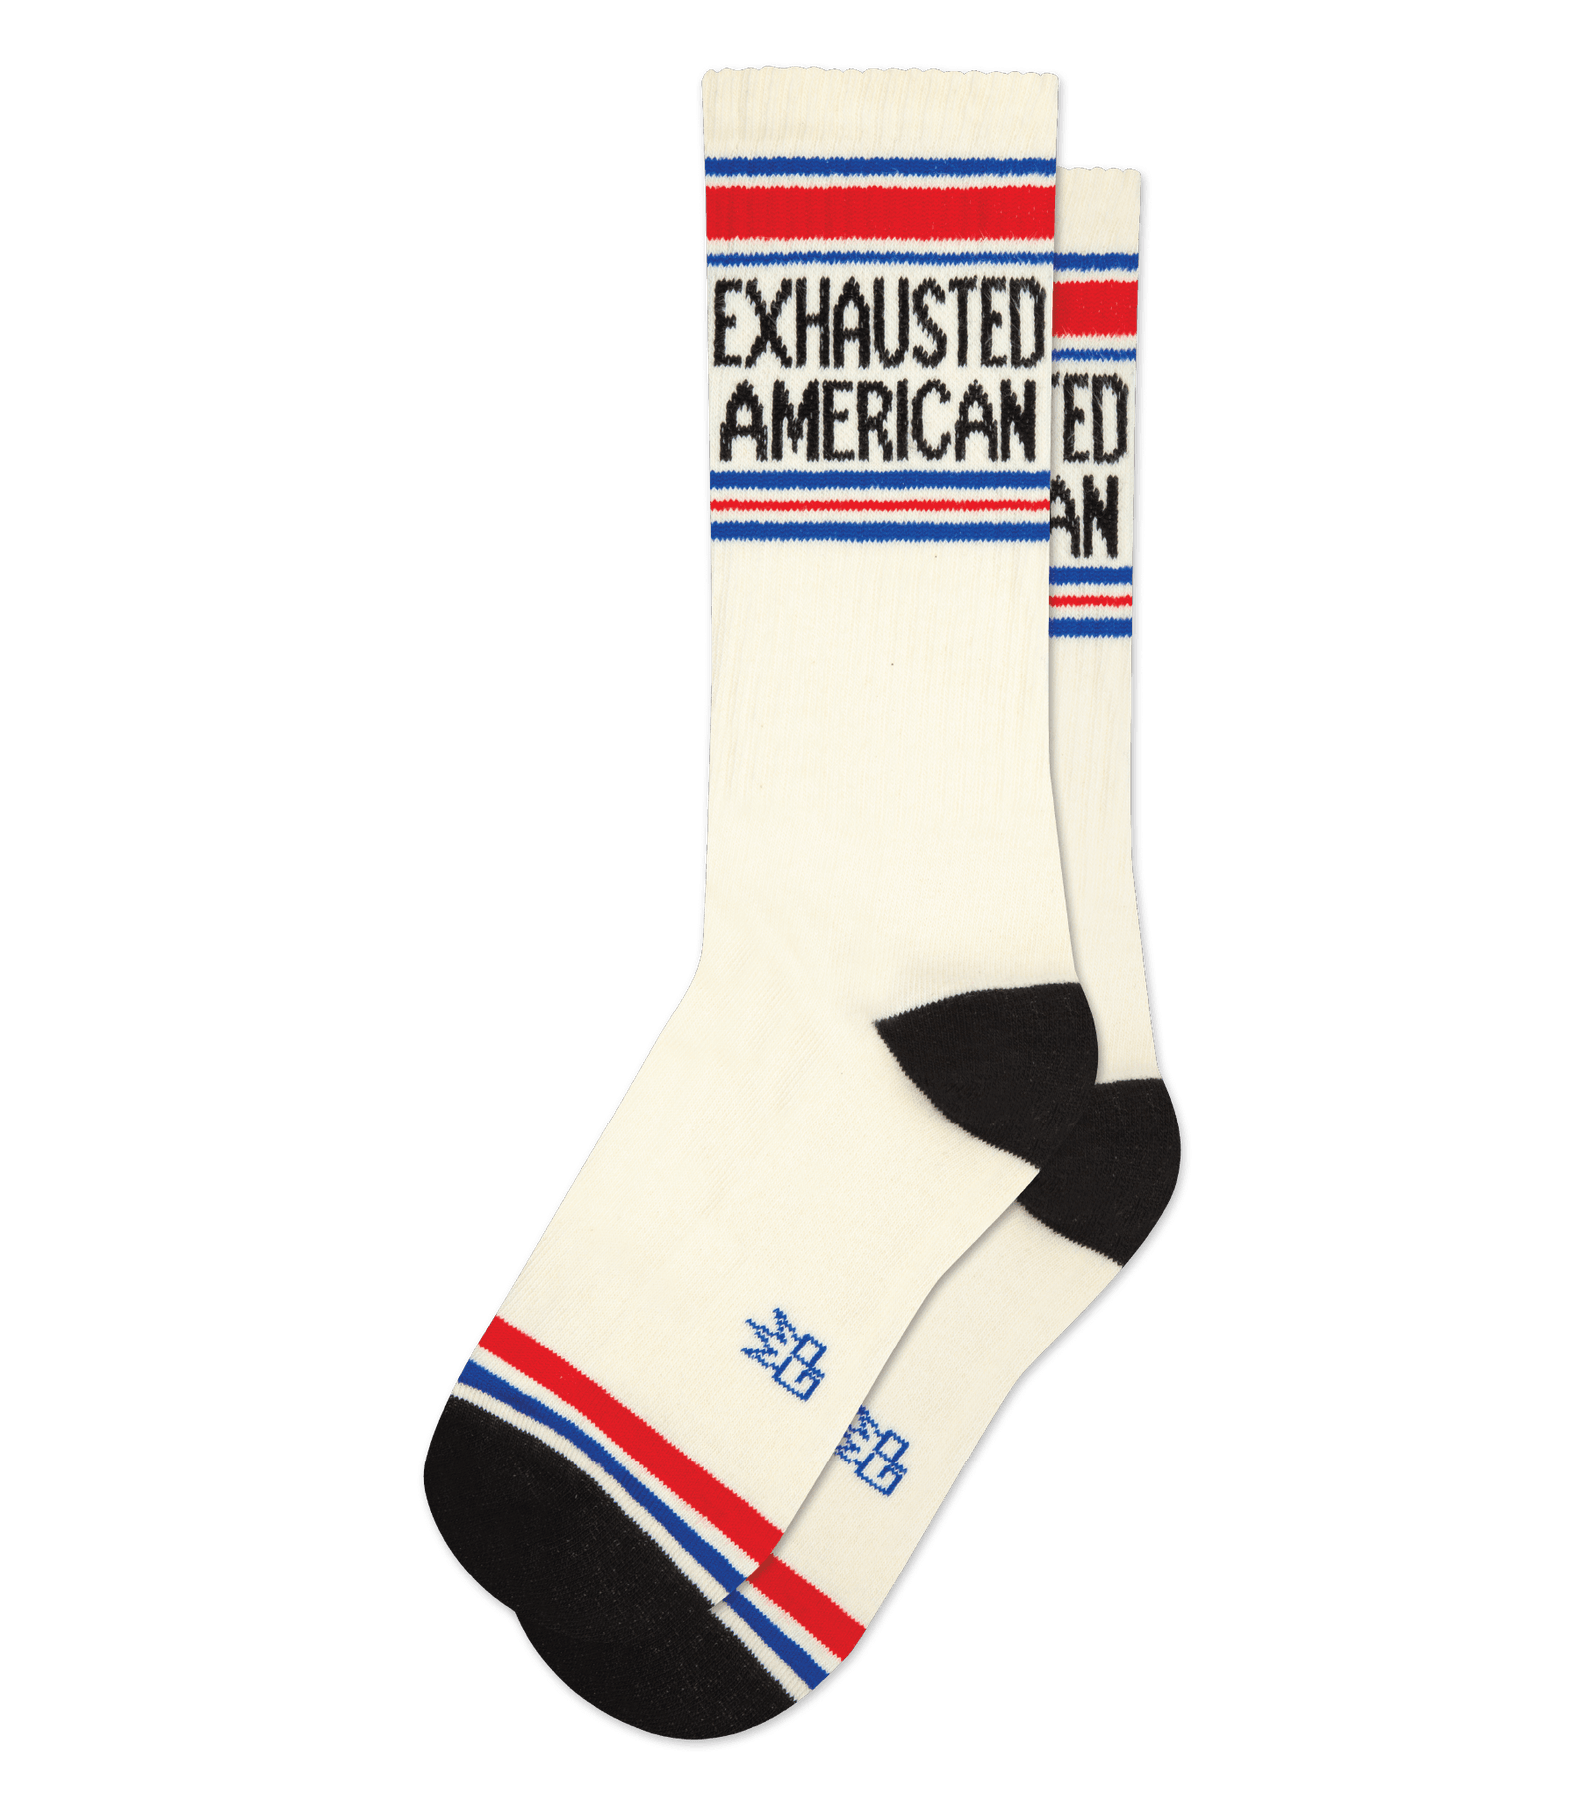 American Socks